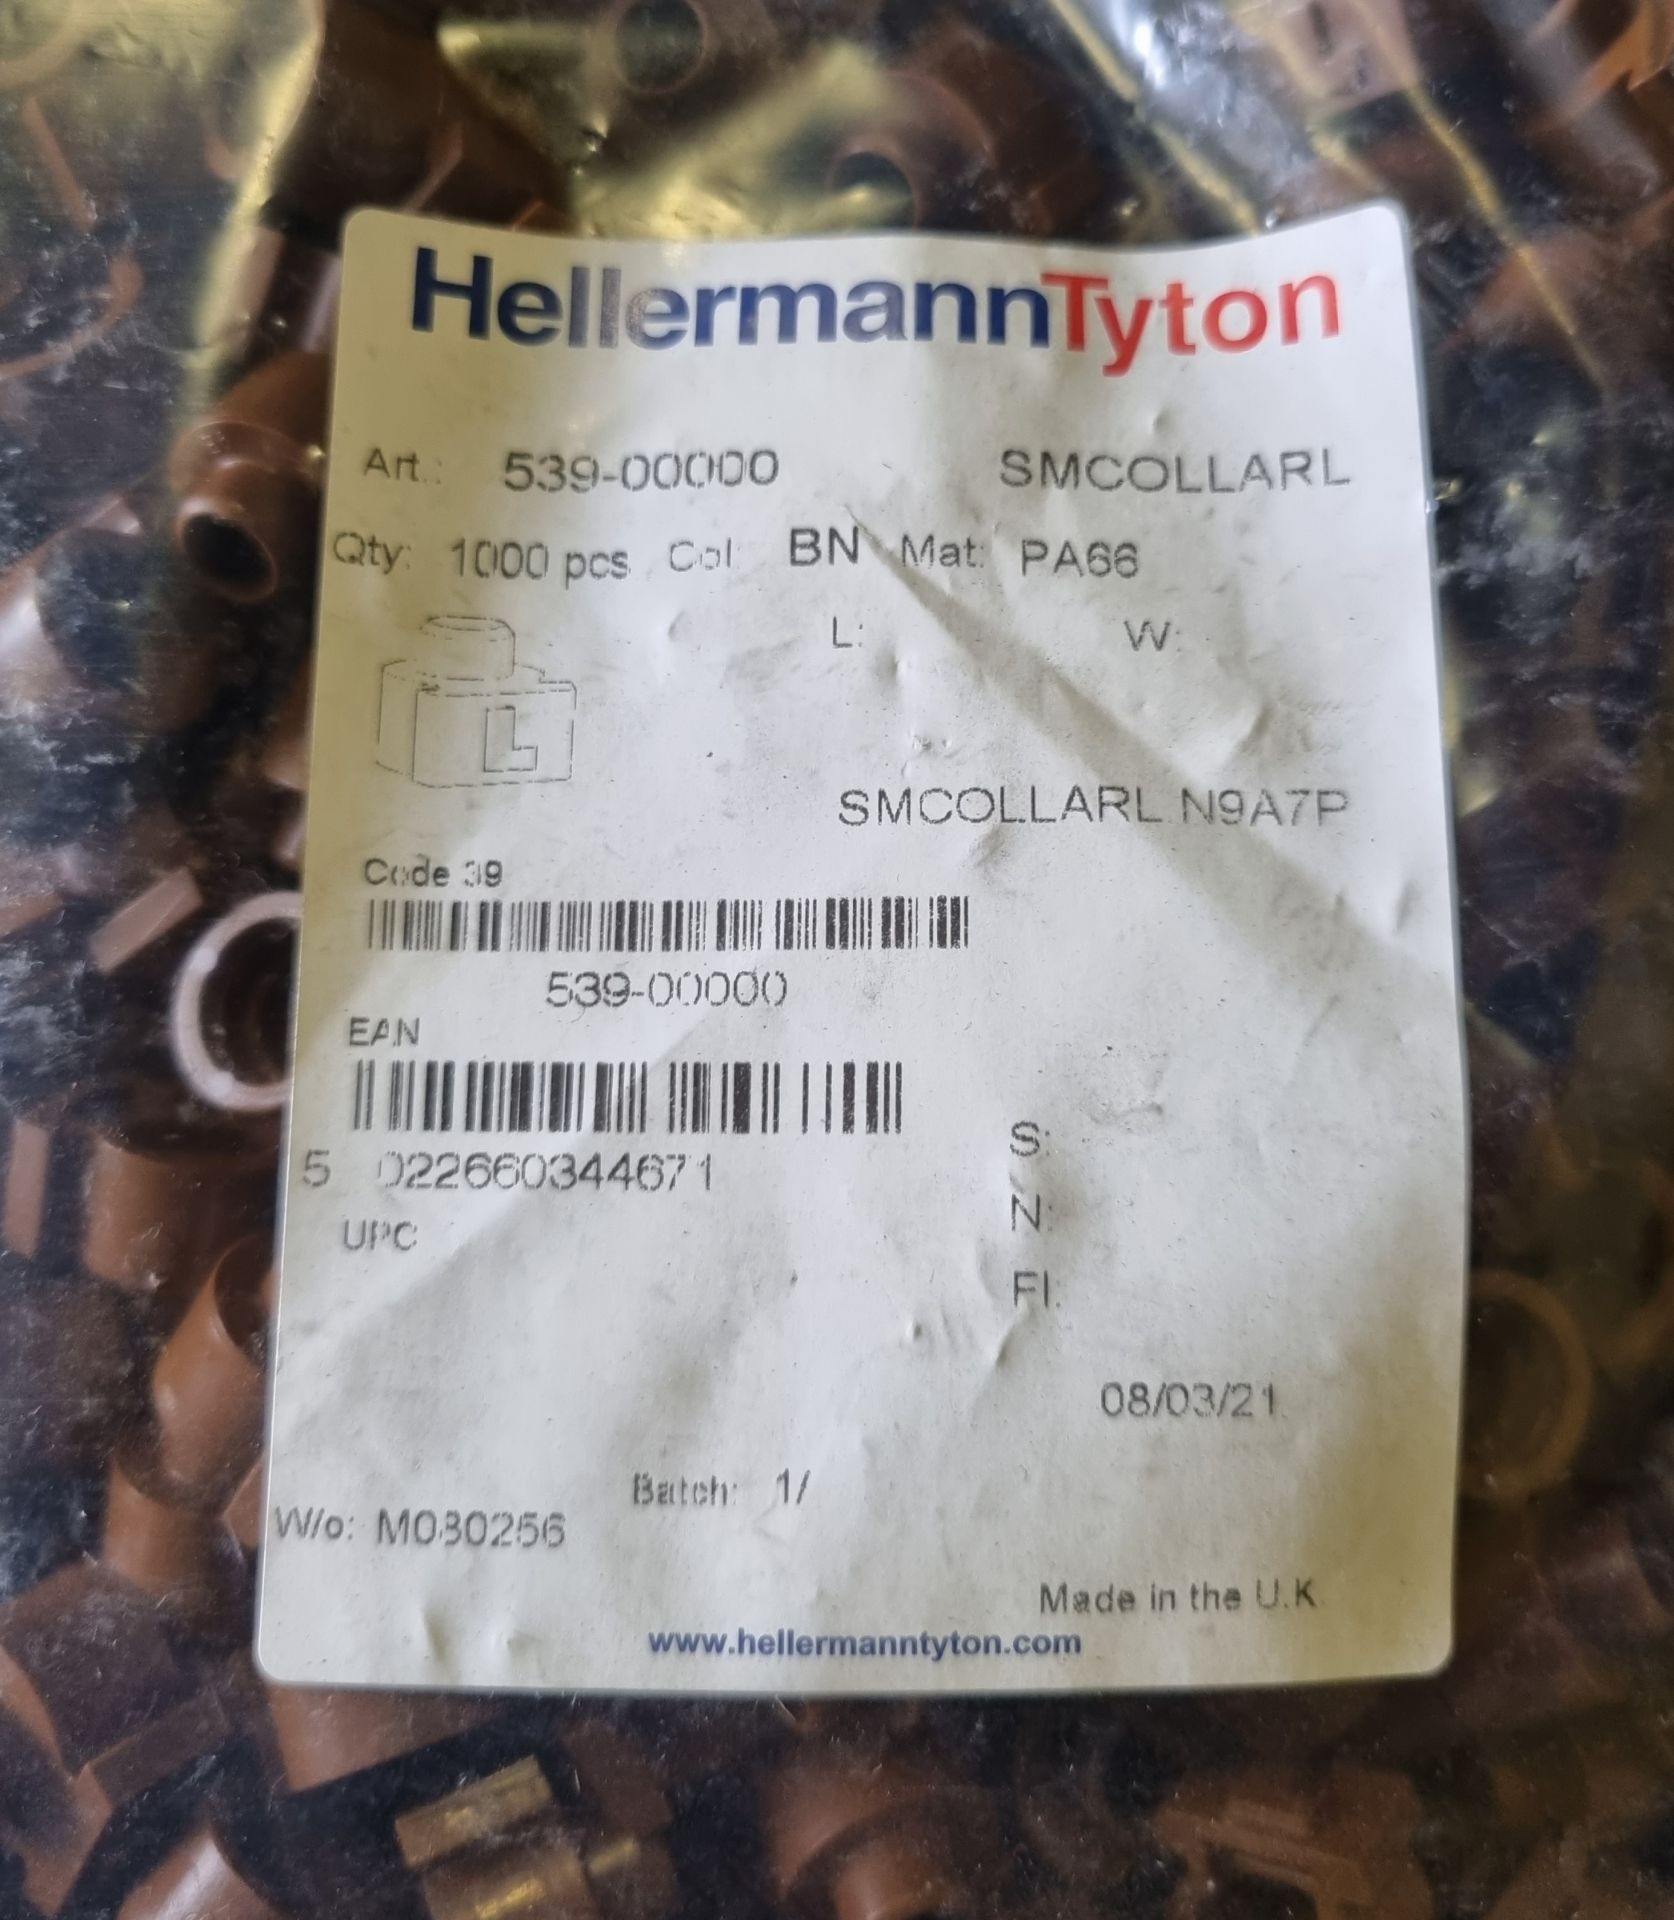 14x packs of HellermannTyton smart meter cable collars - brown (L - Live) - 1000 collars per pack - Image 3 of 3